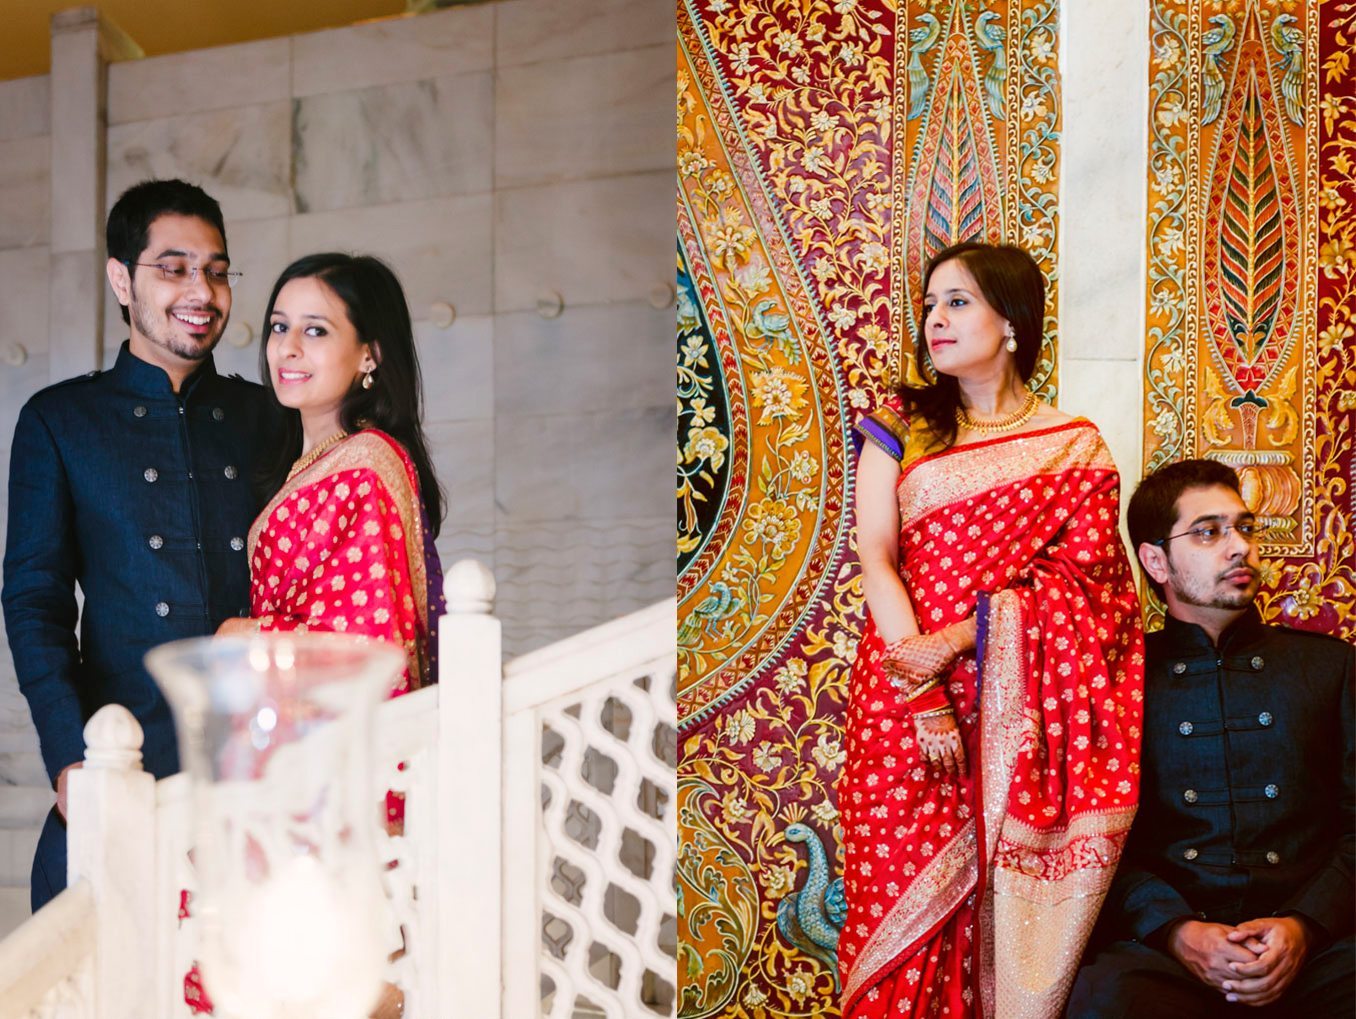 Indian wedding photographer : photography by Naina and Knottytales | Gaurav & Lavanya, Cocktails & Indian Wedding at the Taj Hotel and Aurangzeb Road, New Delhi